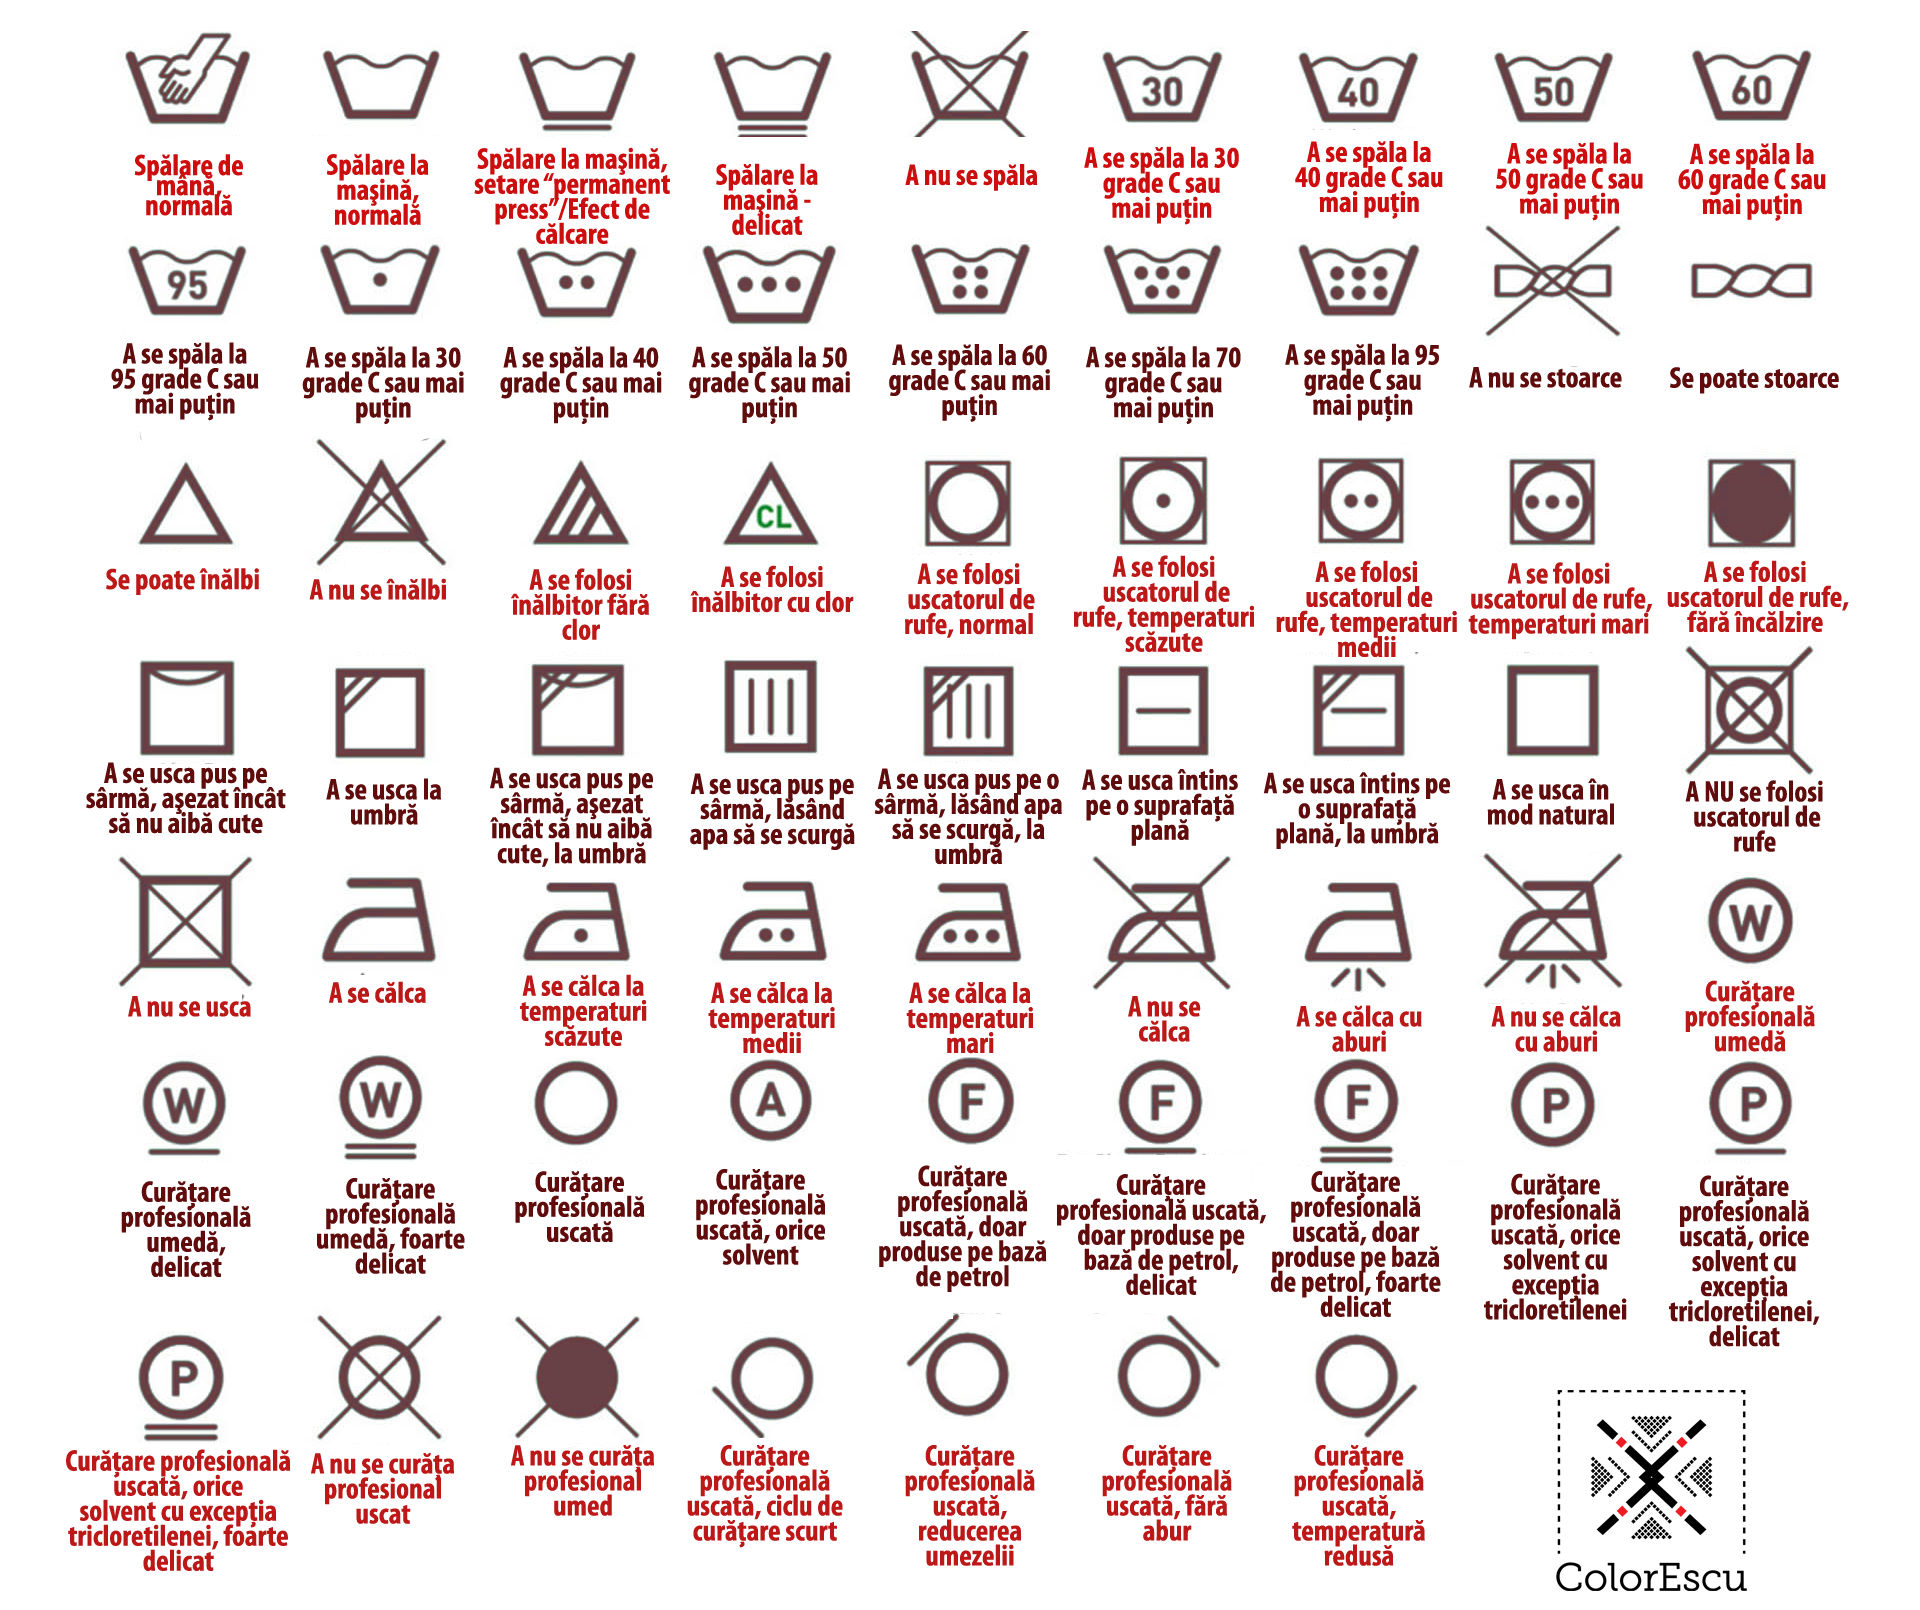 Coin laundry Diploma sheep Toate simbolurile de pe etichetele hainelor, explicate